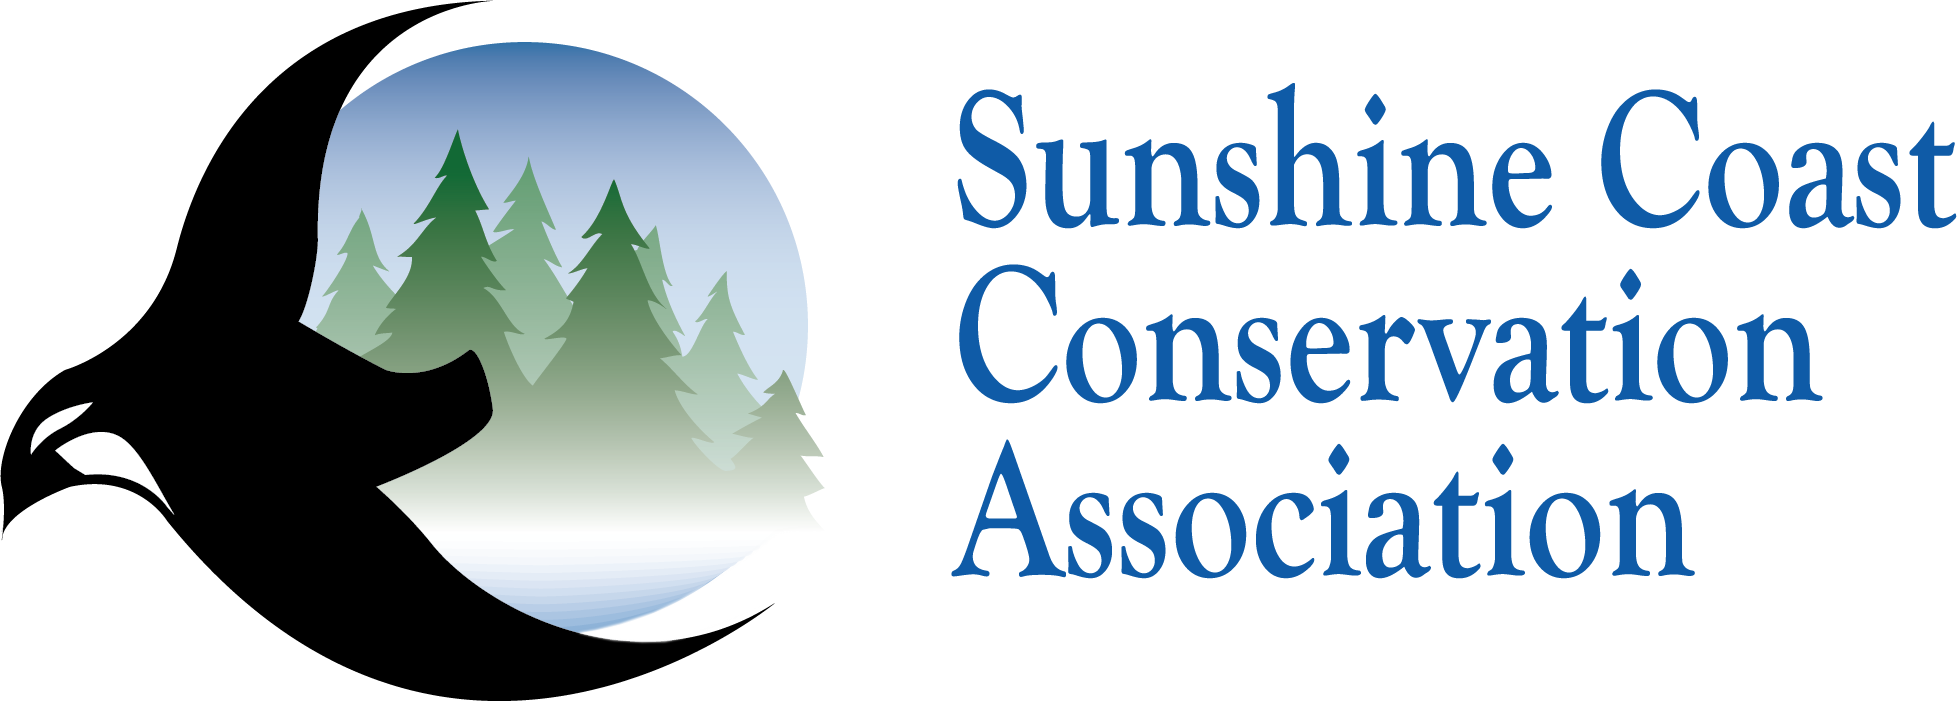 Sunshine Coast Conservation Association